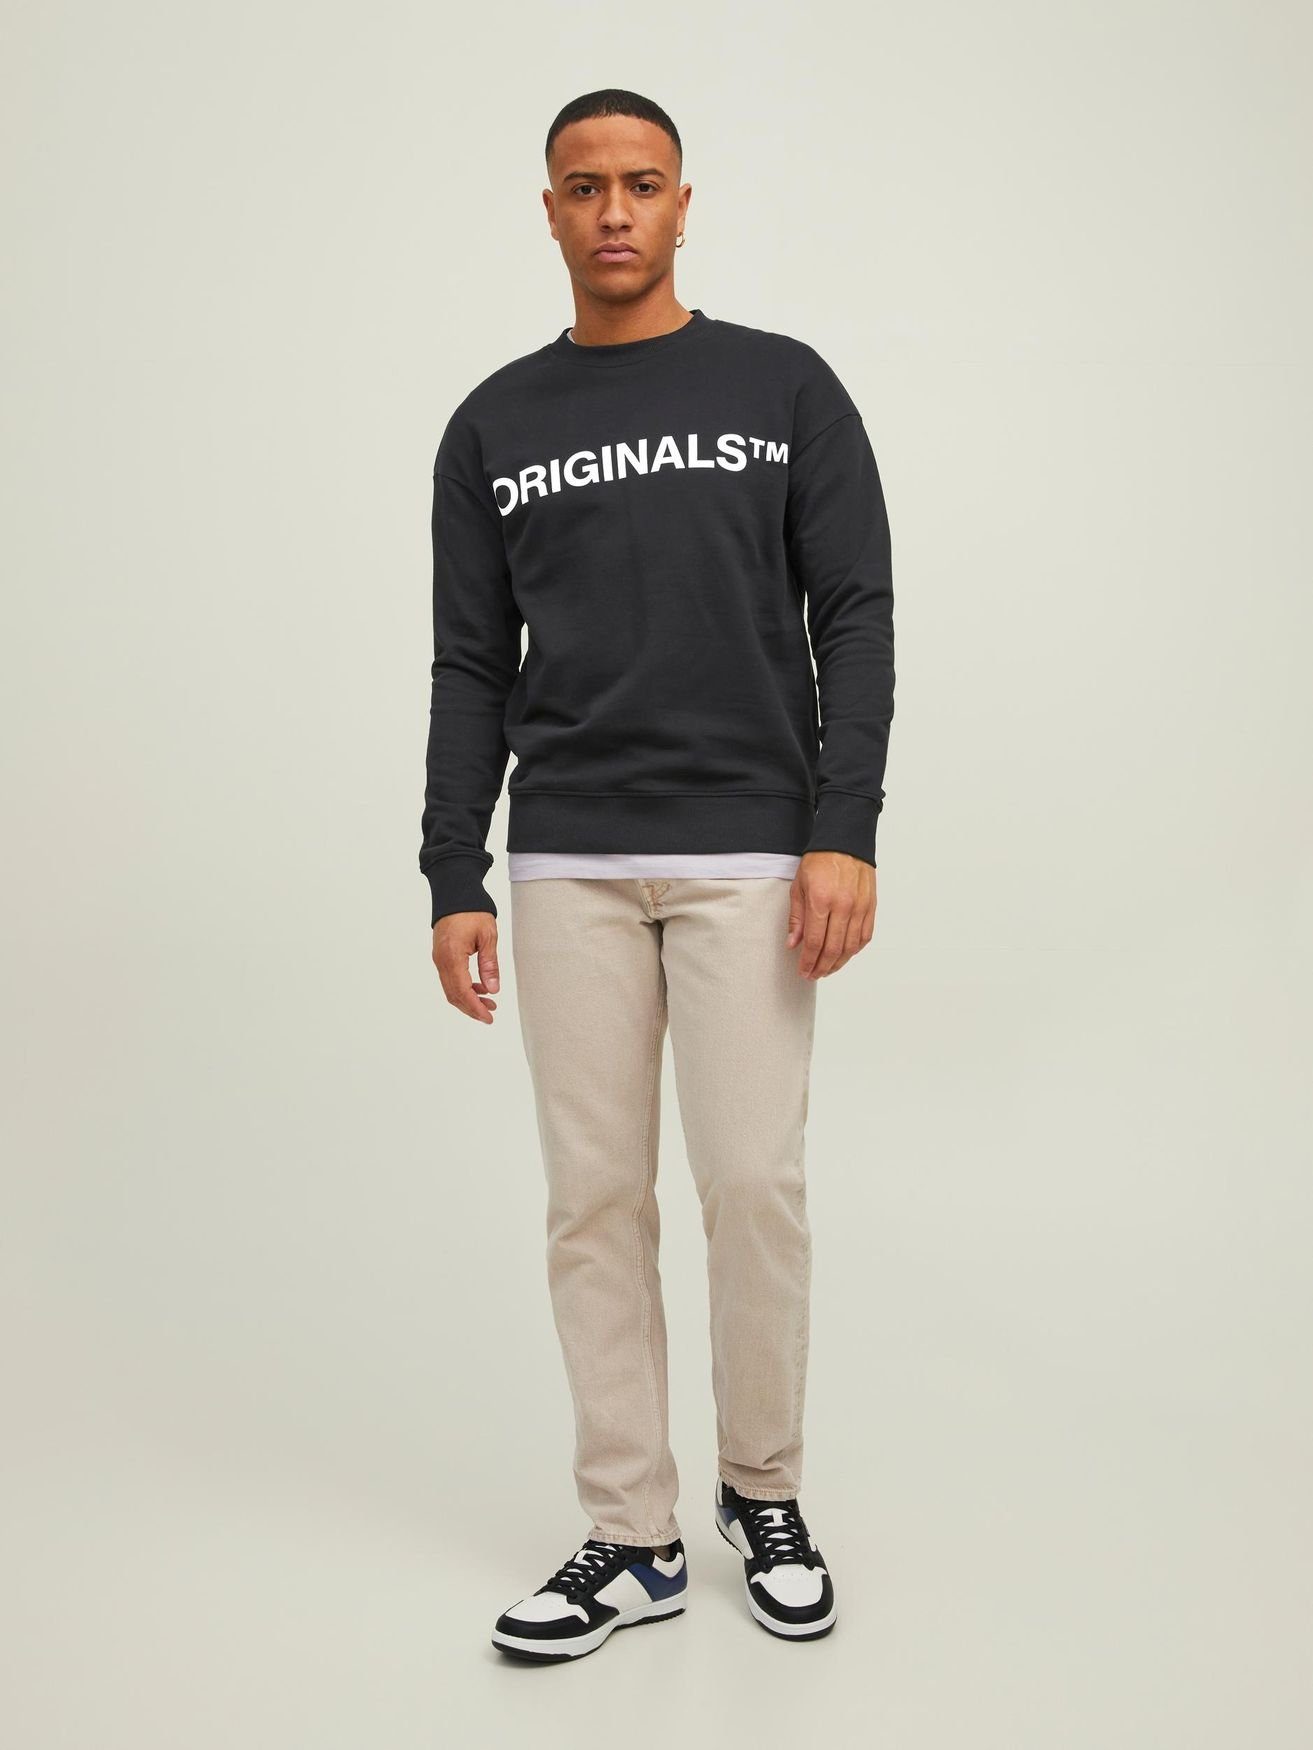 Langarm Sweater Sweatshirt Jack JORCLEAN & Basic Schwarz-2 Jones 4672 Shirt in Rundhals Pullover